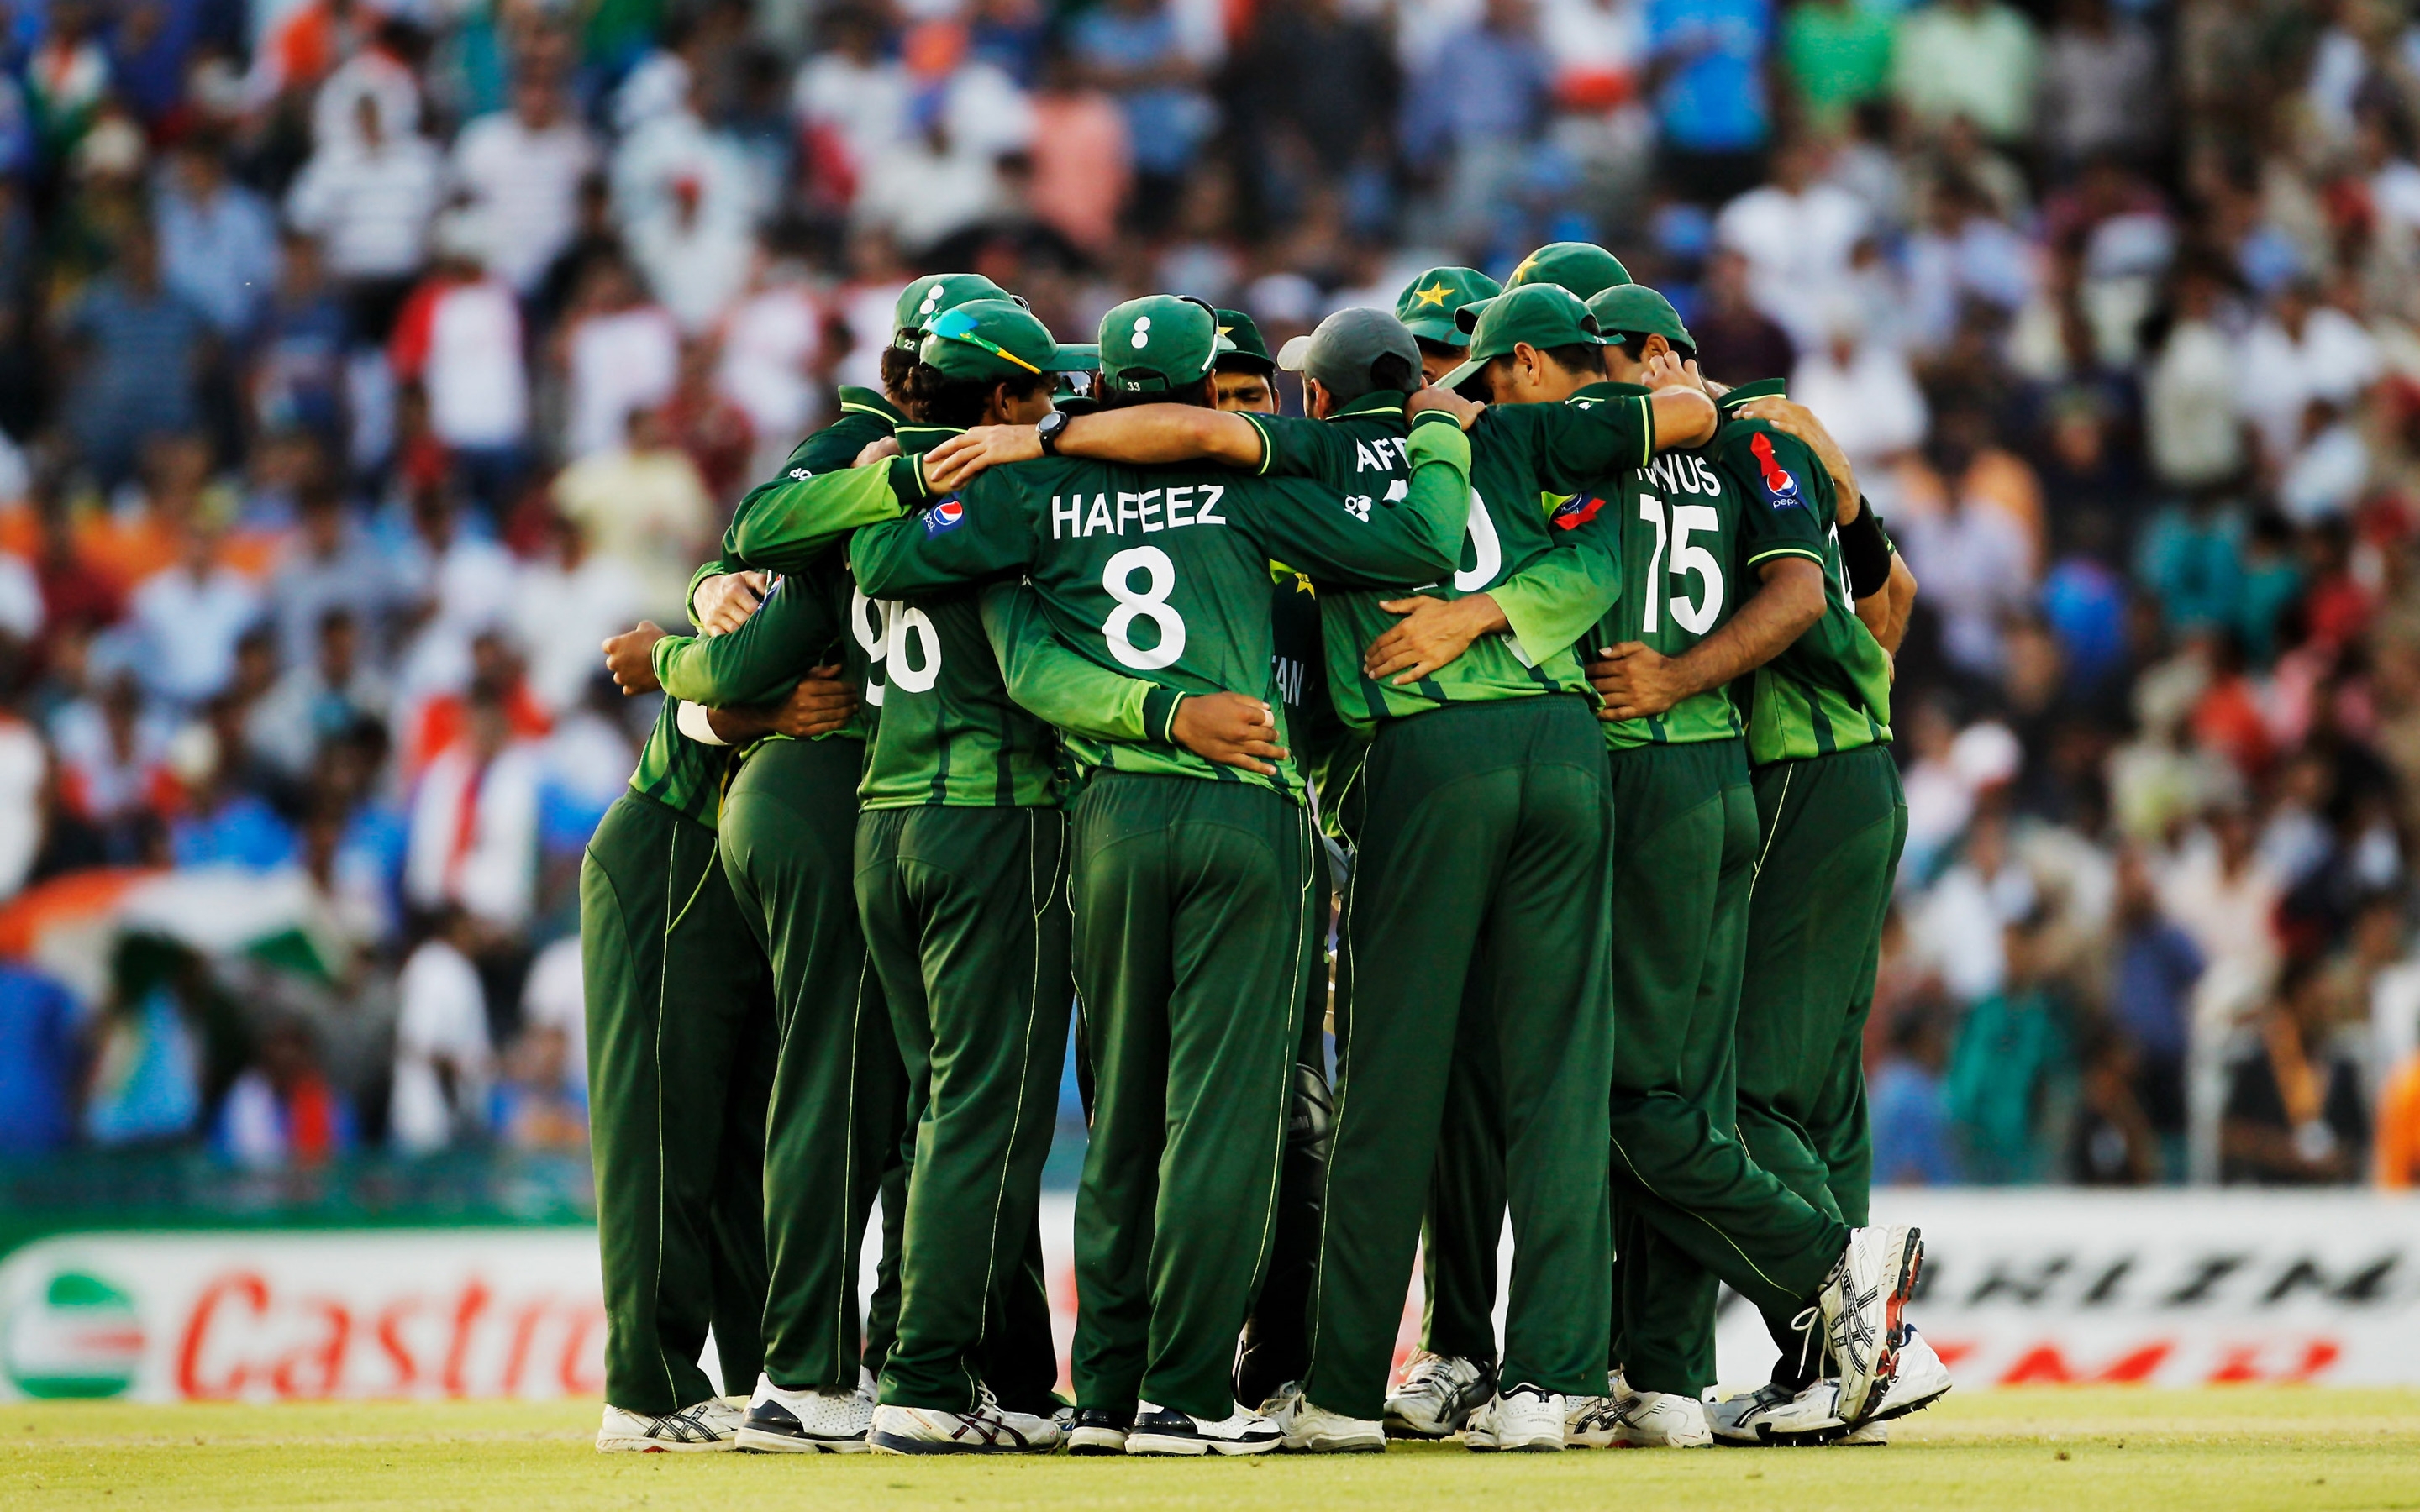 Pakistan Cricket Team for 2880 x 1800 Retina Display resolution